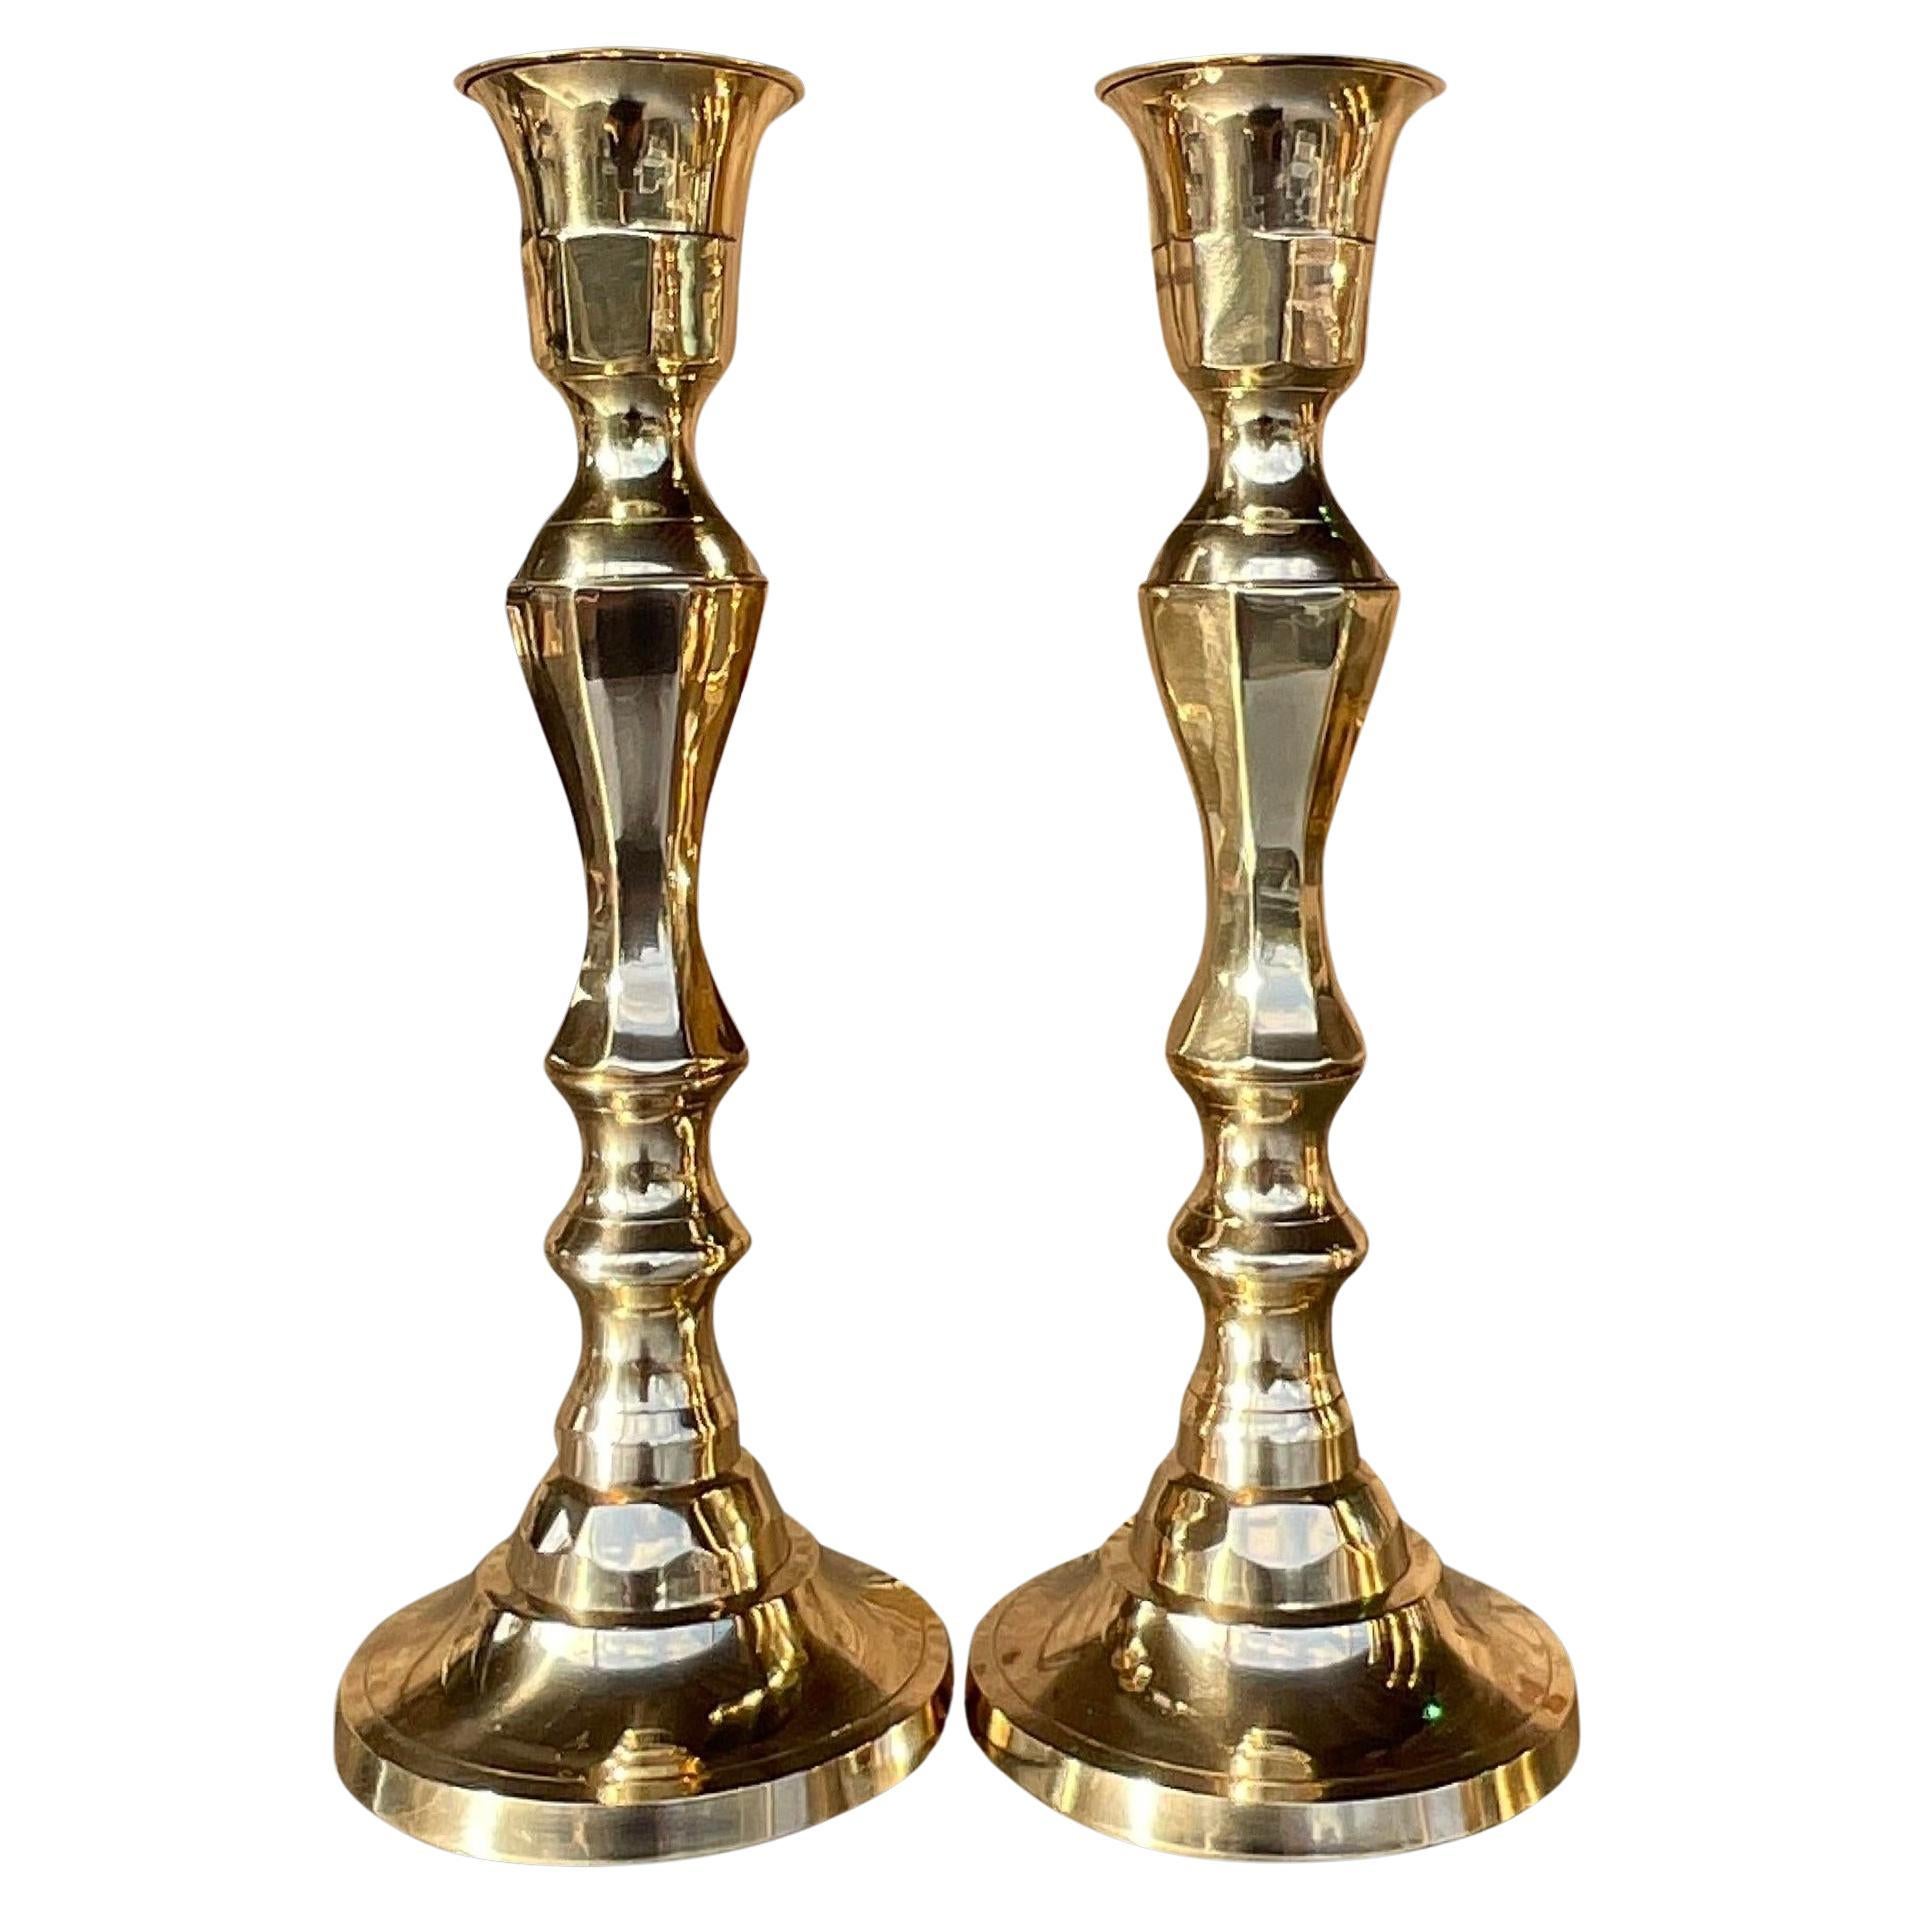 Vintage Regency Faceted Polished Brass Candlesticks - a Pair